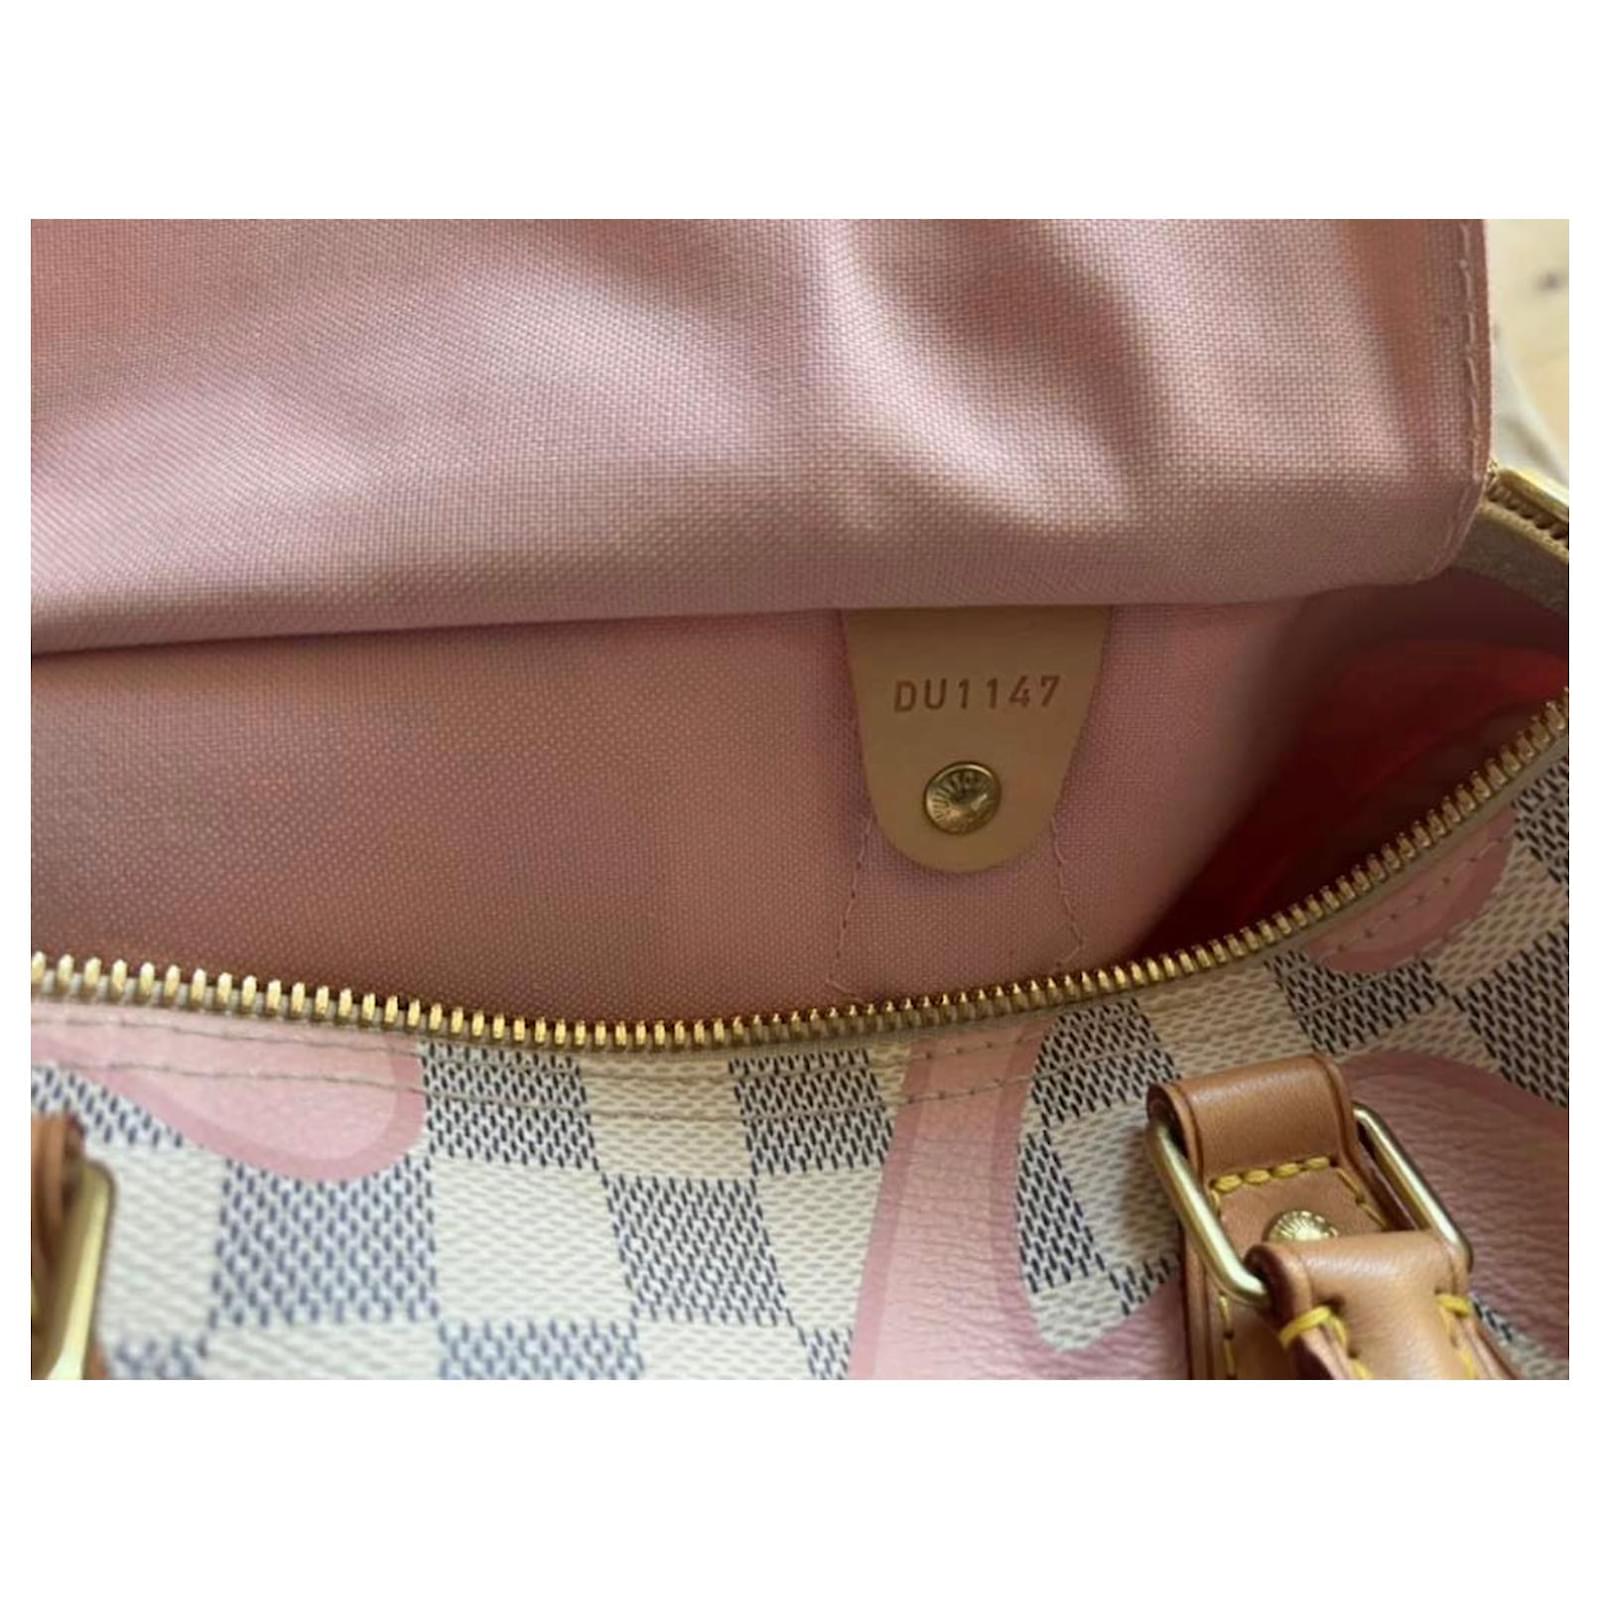 Louis Vuitton Speedy 30 Bandoulière Pink Tahitienne Handbag Bag